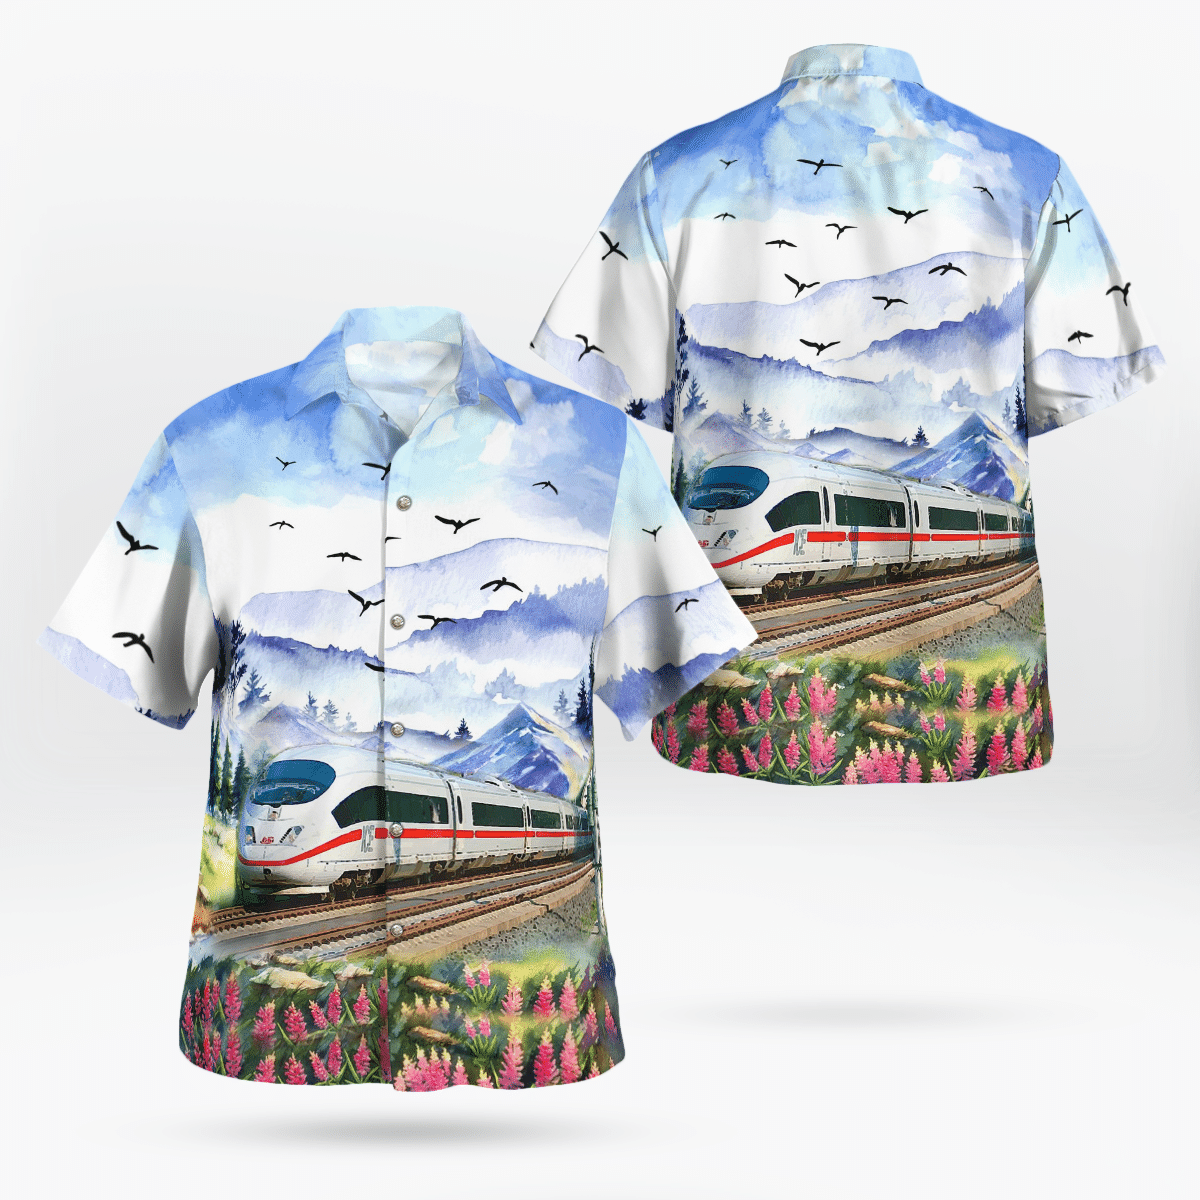 Get a new Hawaiian shirt to enjoy summer vacation 203